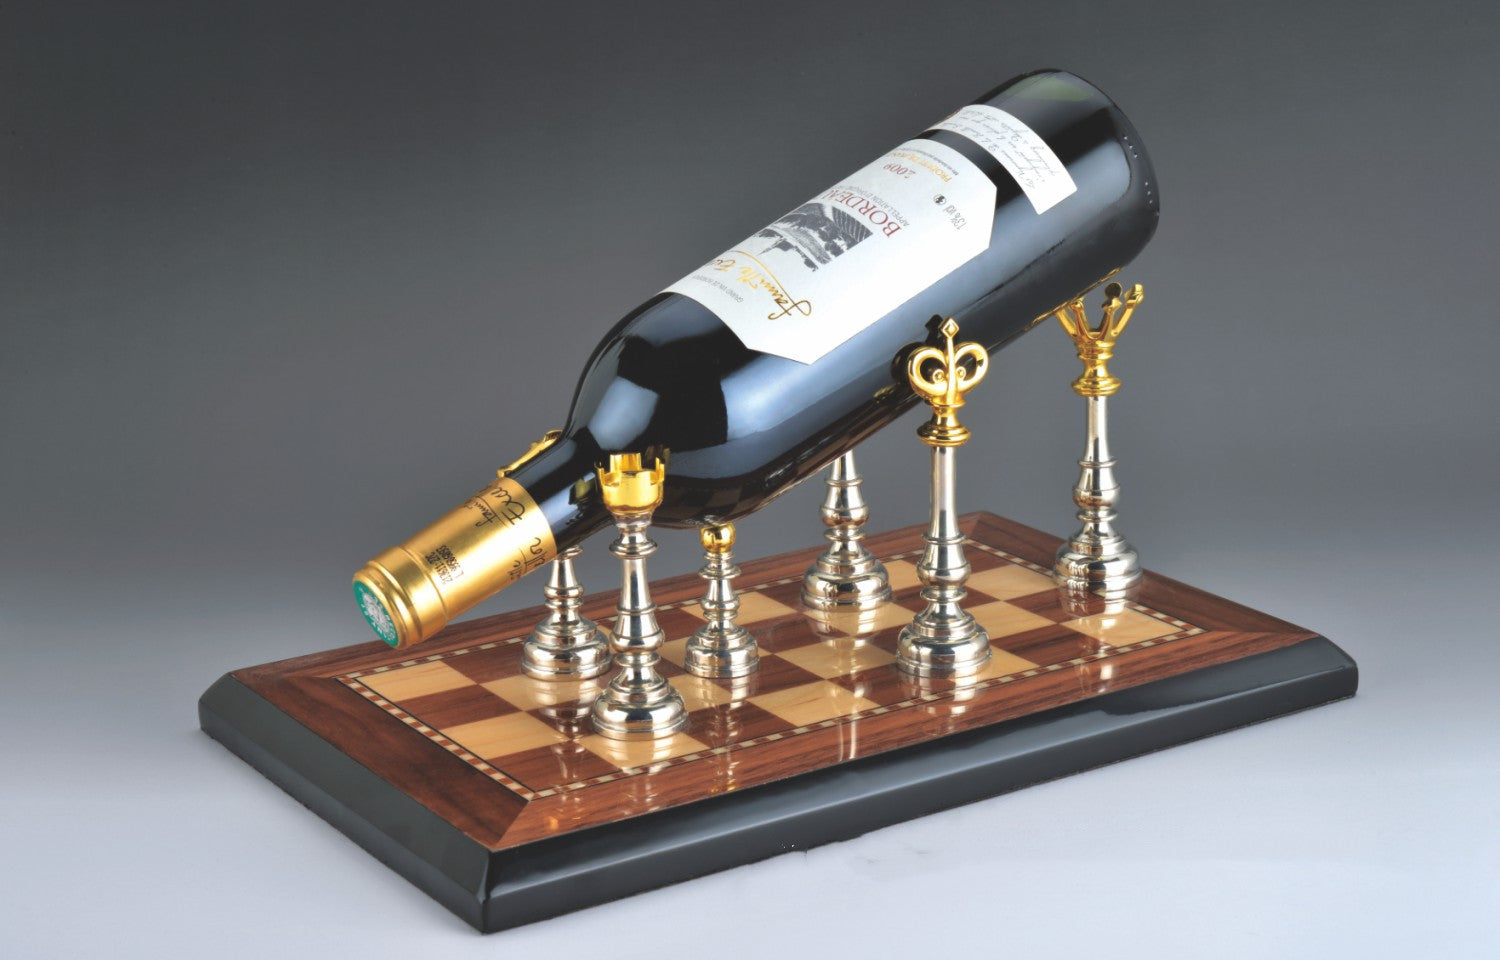 The Chessboard Wine Rack